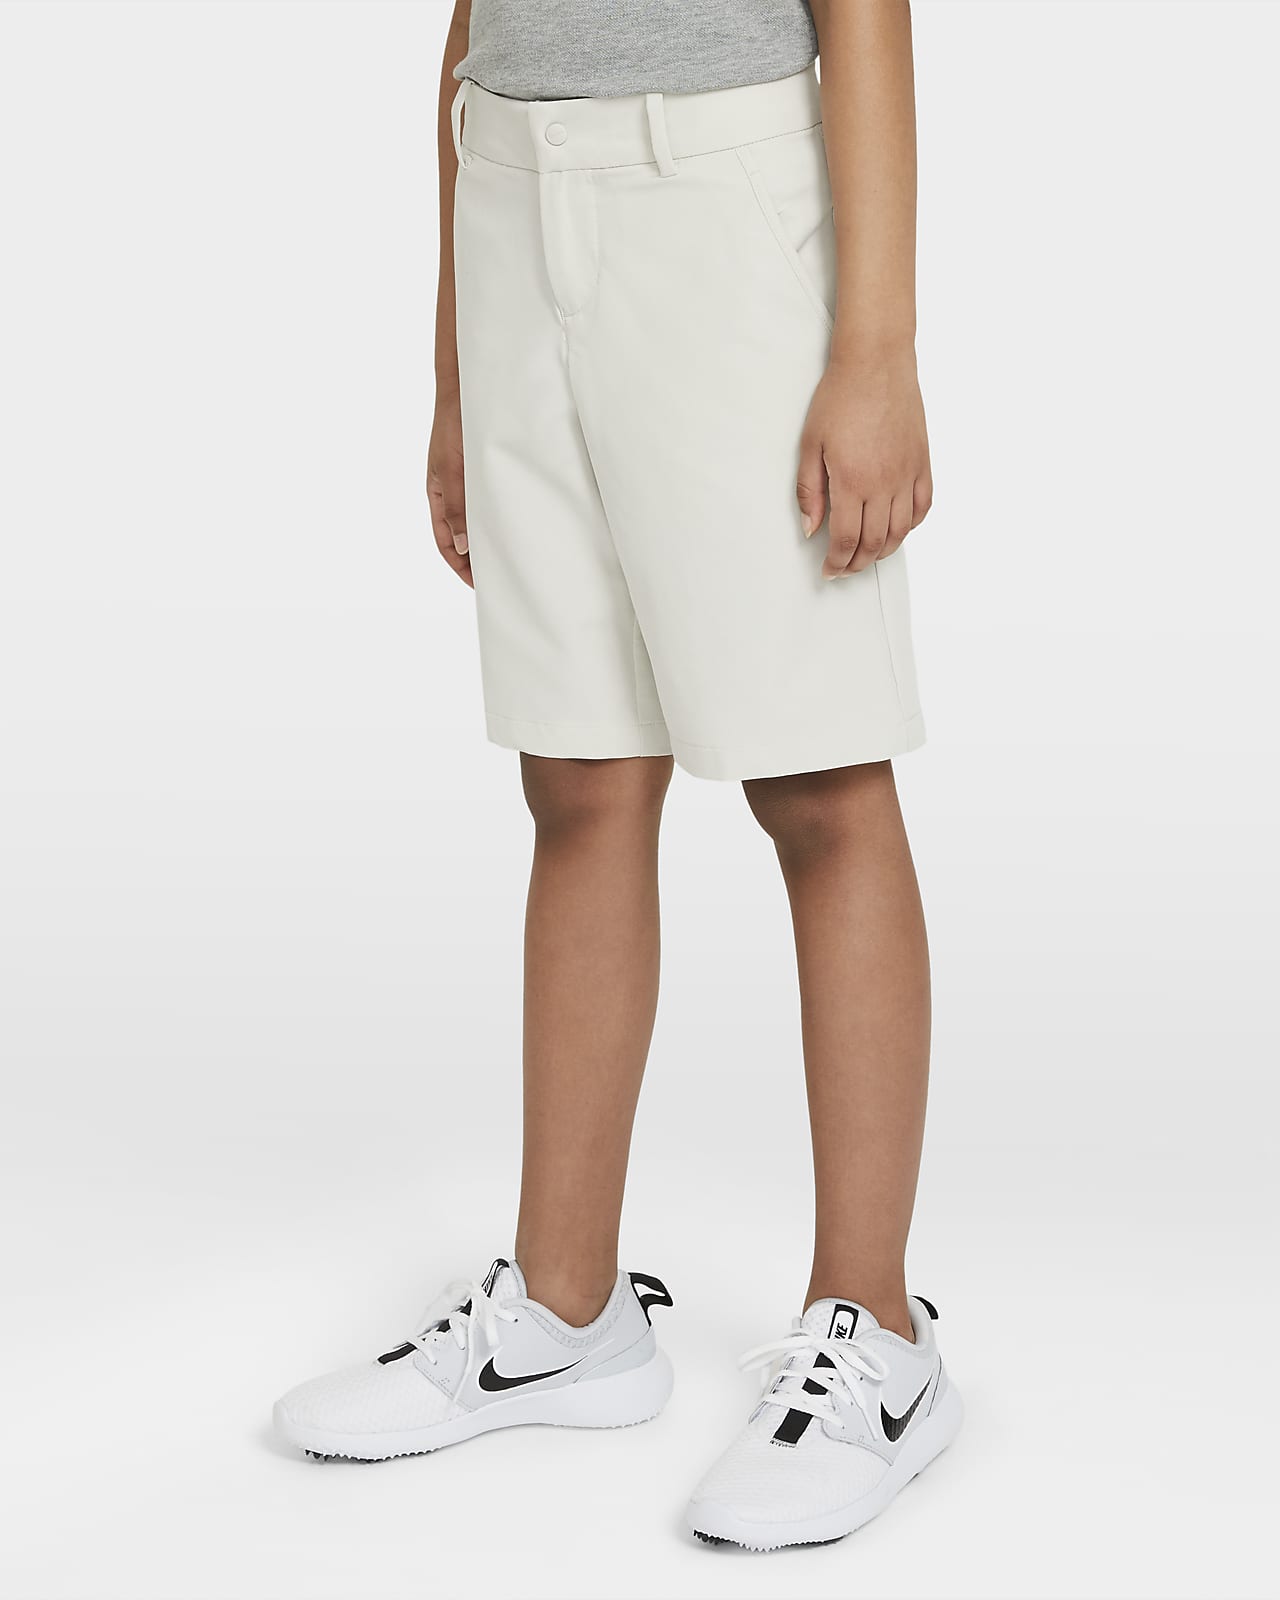 Nike Big Kids' (Boys') Golf Shorts